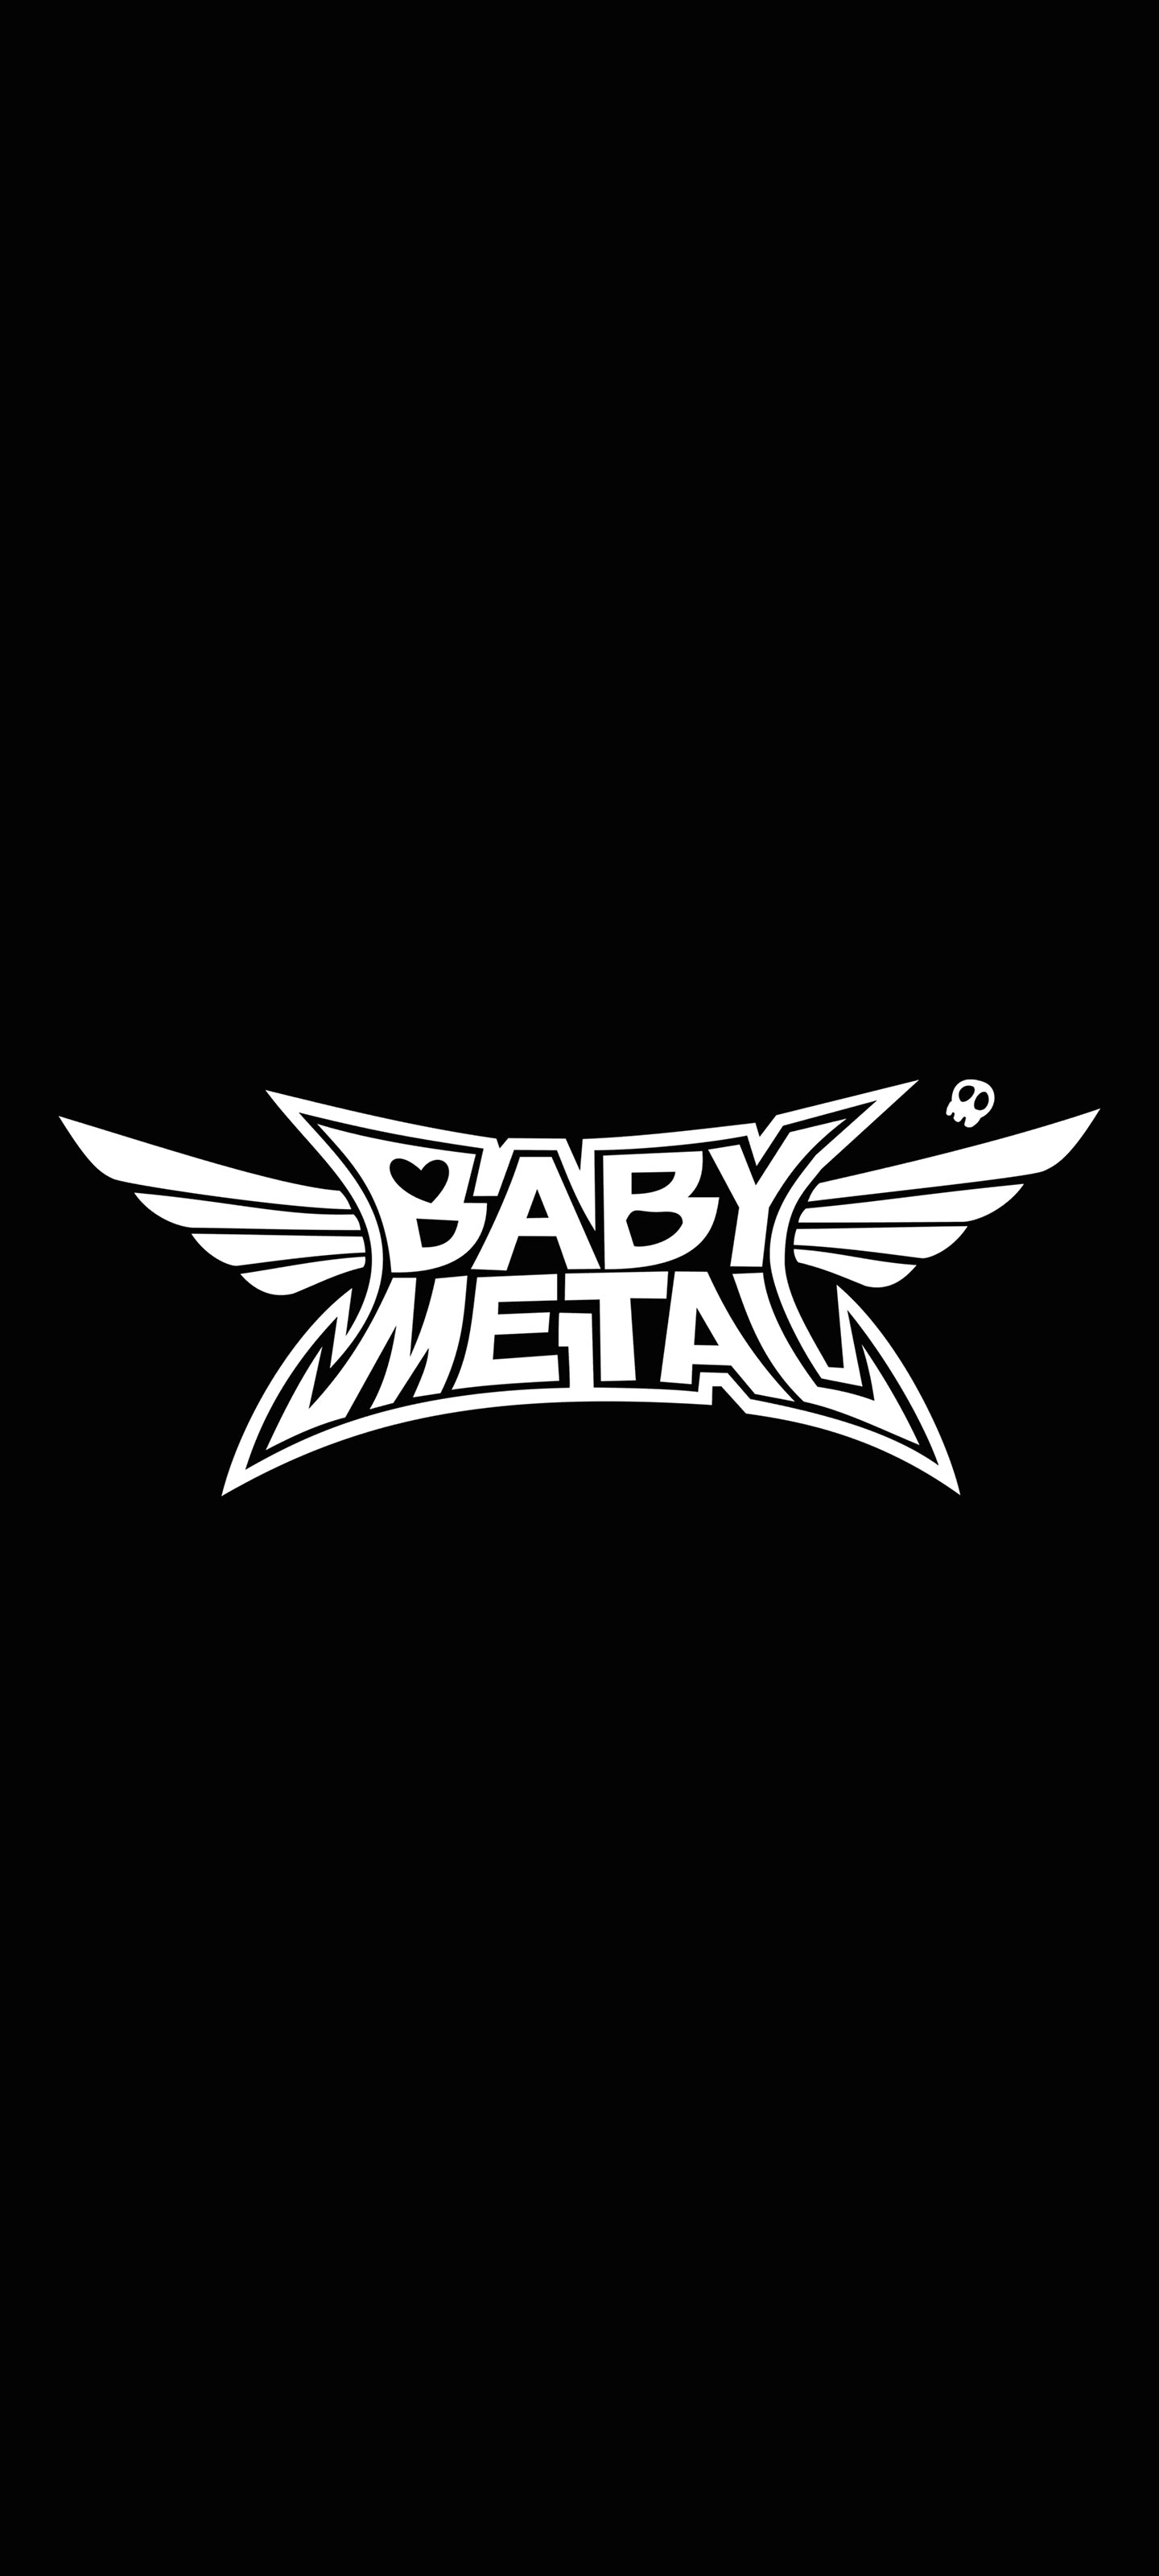 Babymetal ベビーメタル ロゴ の無料待ち受け画像 スマホ壁紙 Iphone Android 1 待ち受けparadise